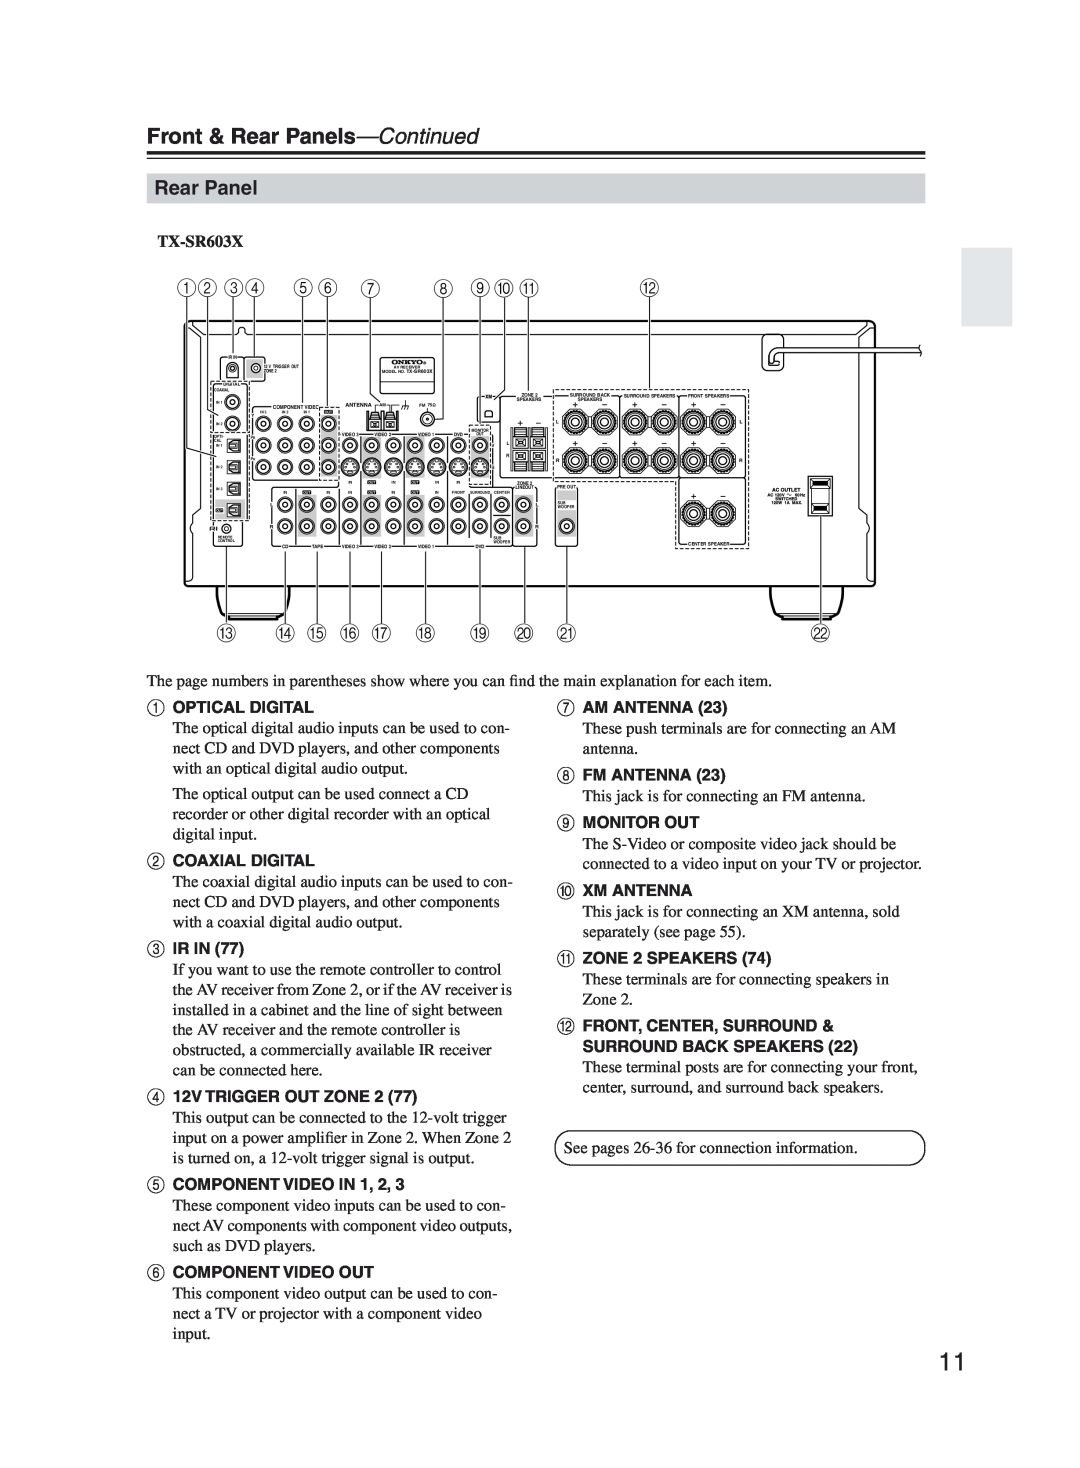 Onkyo TX-SR603X instruction manual Front & Rear Panels—Continued, 1B CD 5 6 G H 9 J K, M N O P Q R, S T U 